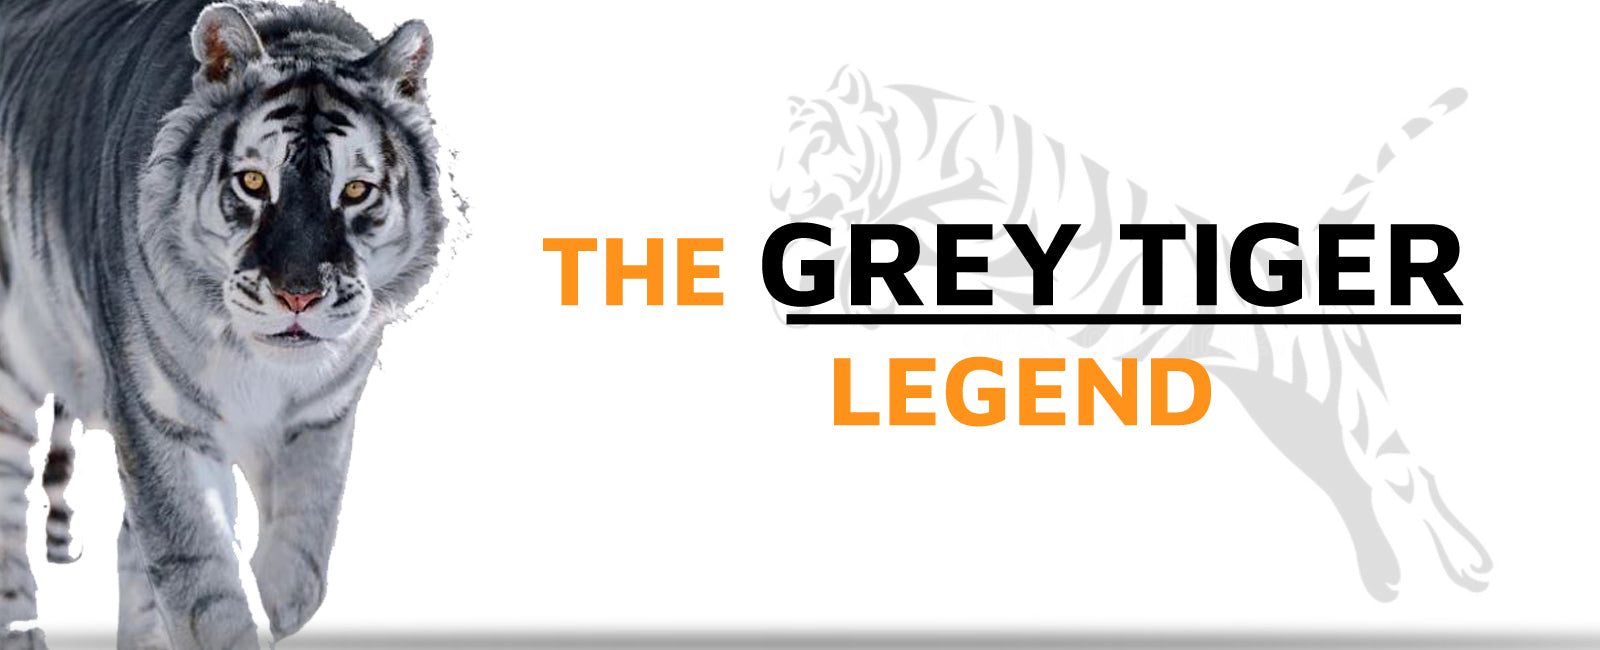 The Grey Tiger Legend